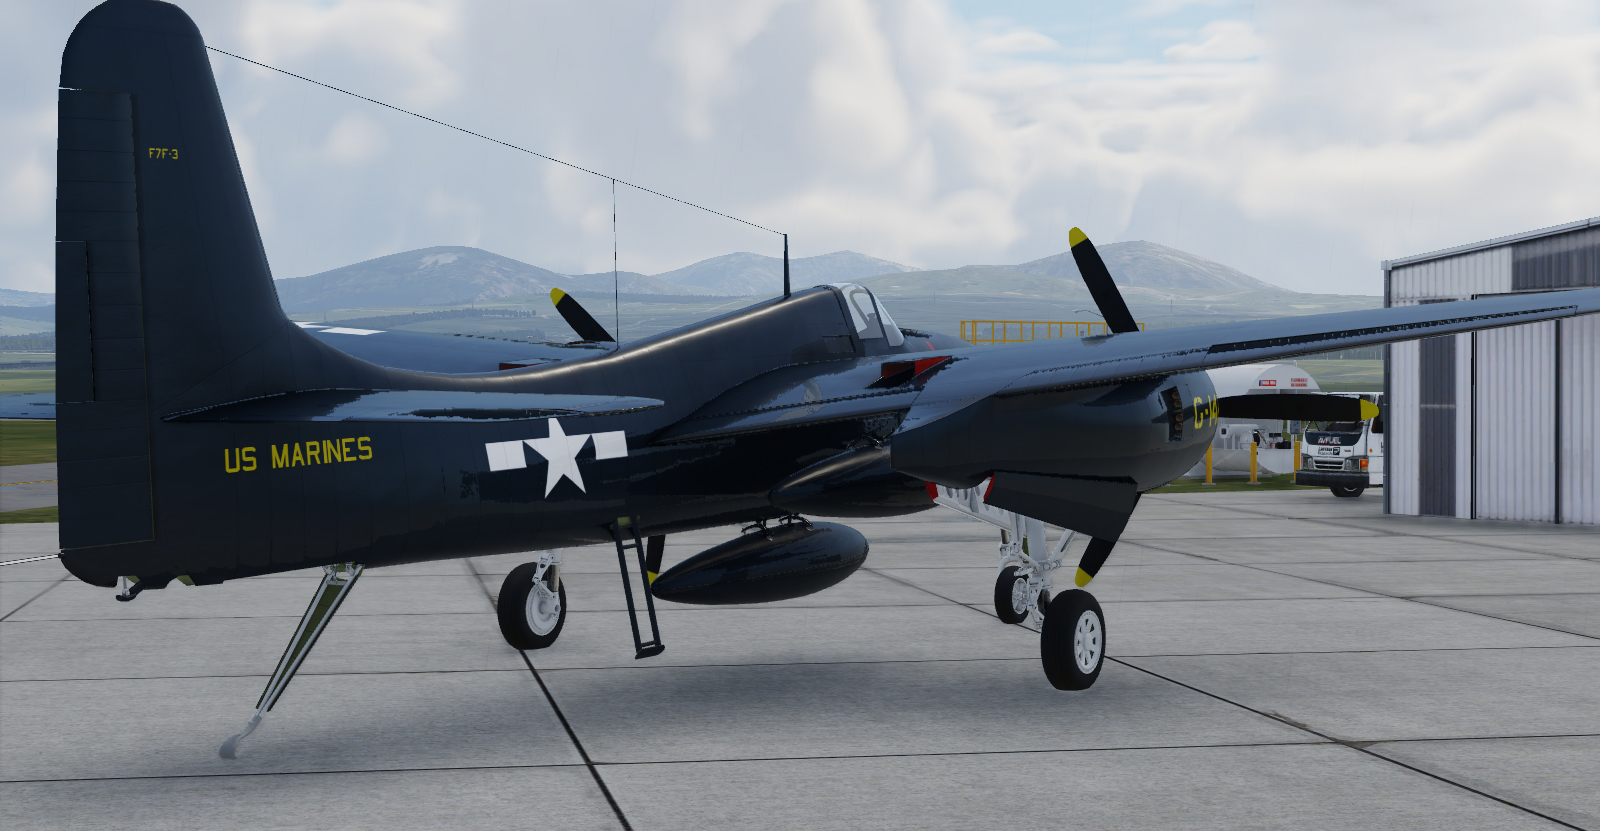 Virtavia F7f 3 Tigercat For X Plane